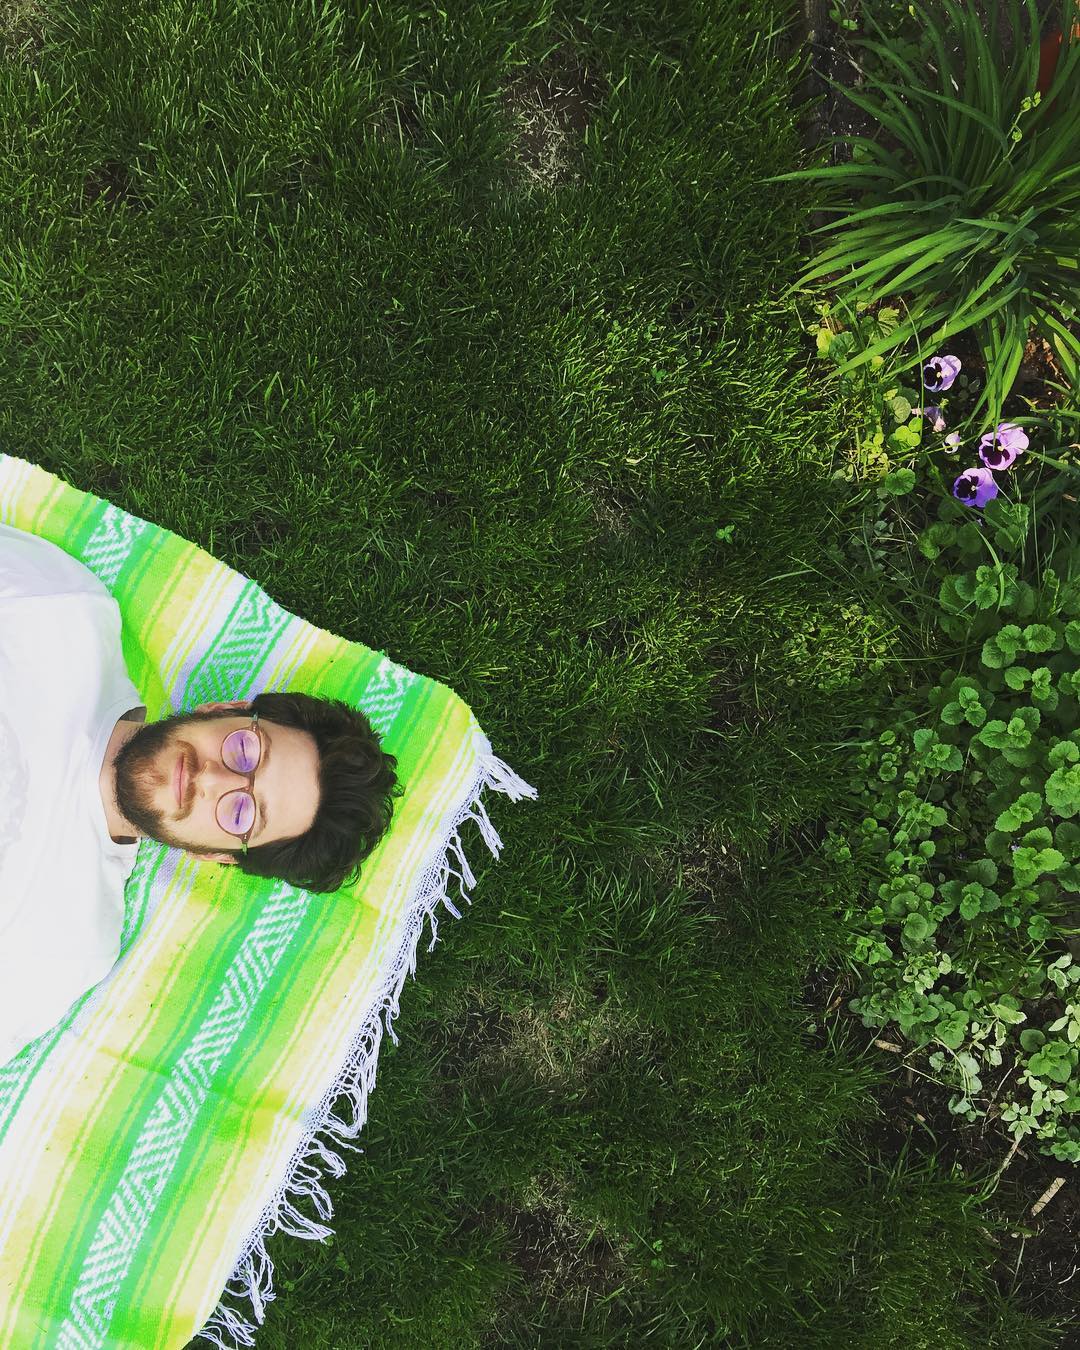 Jordan lying on a blanket in the grass